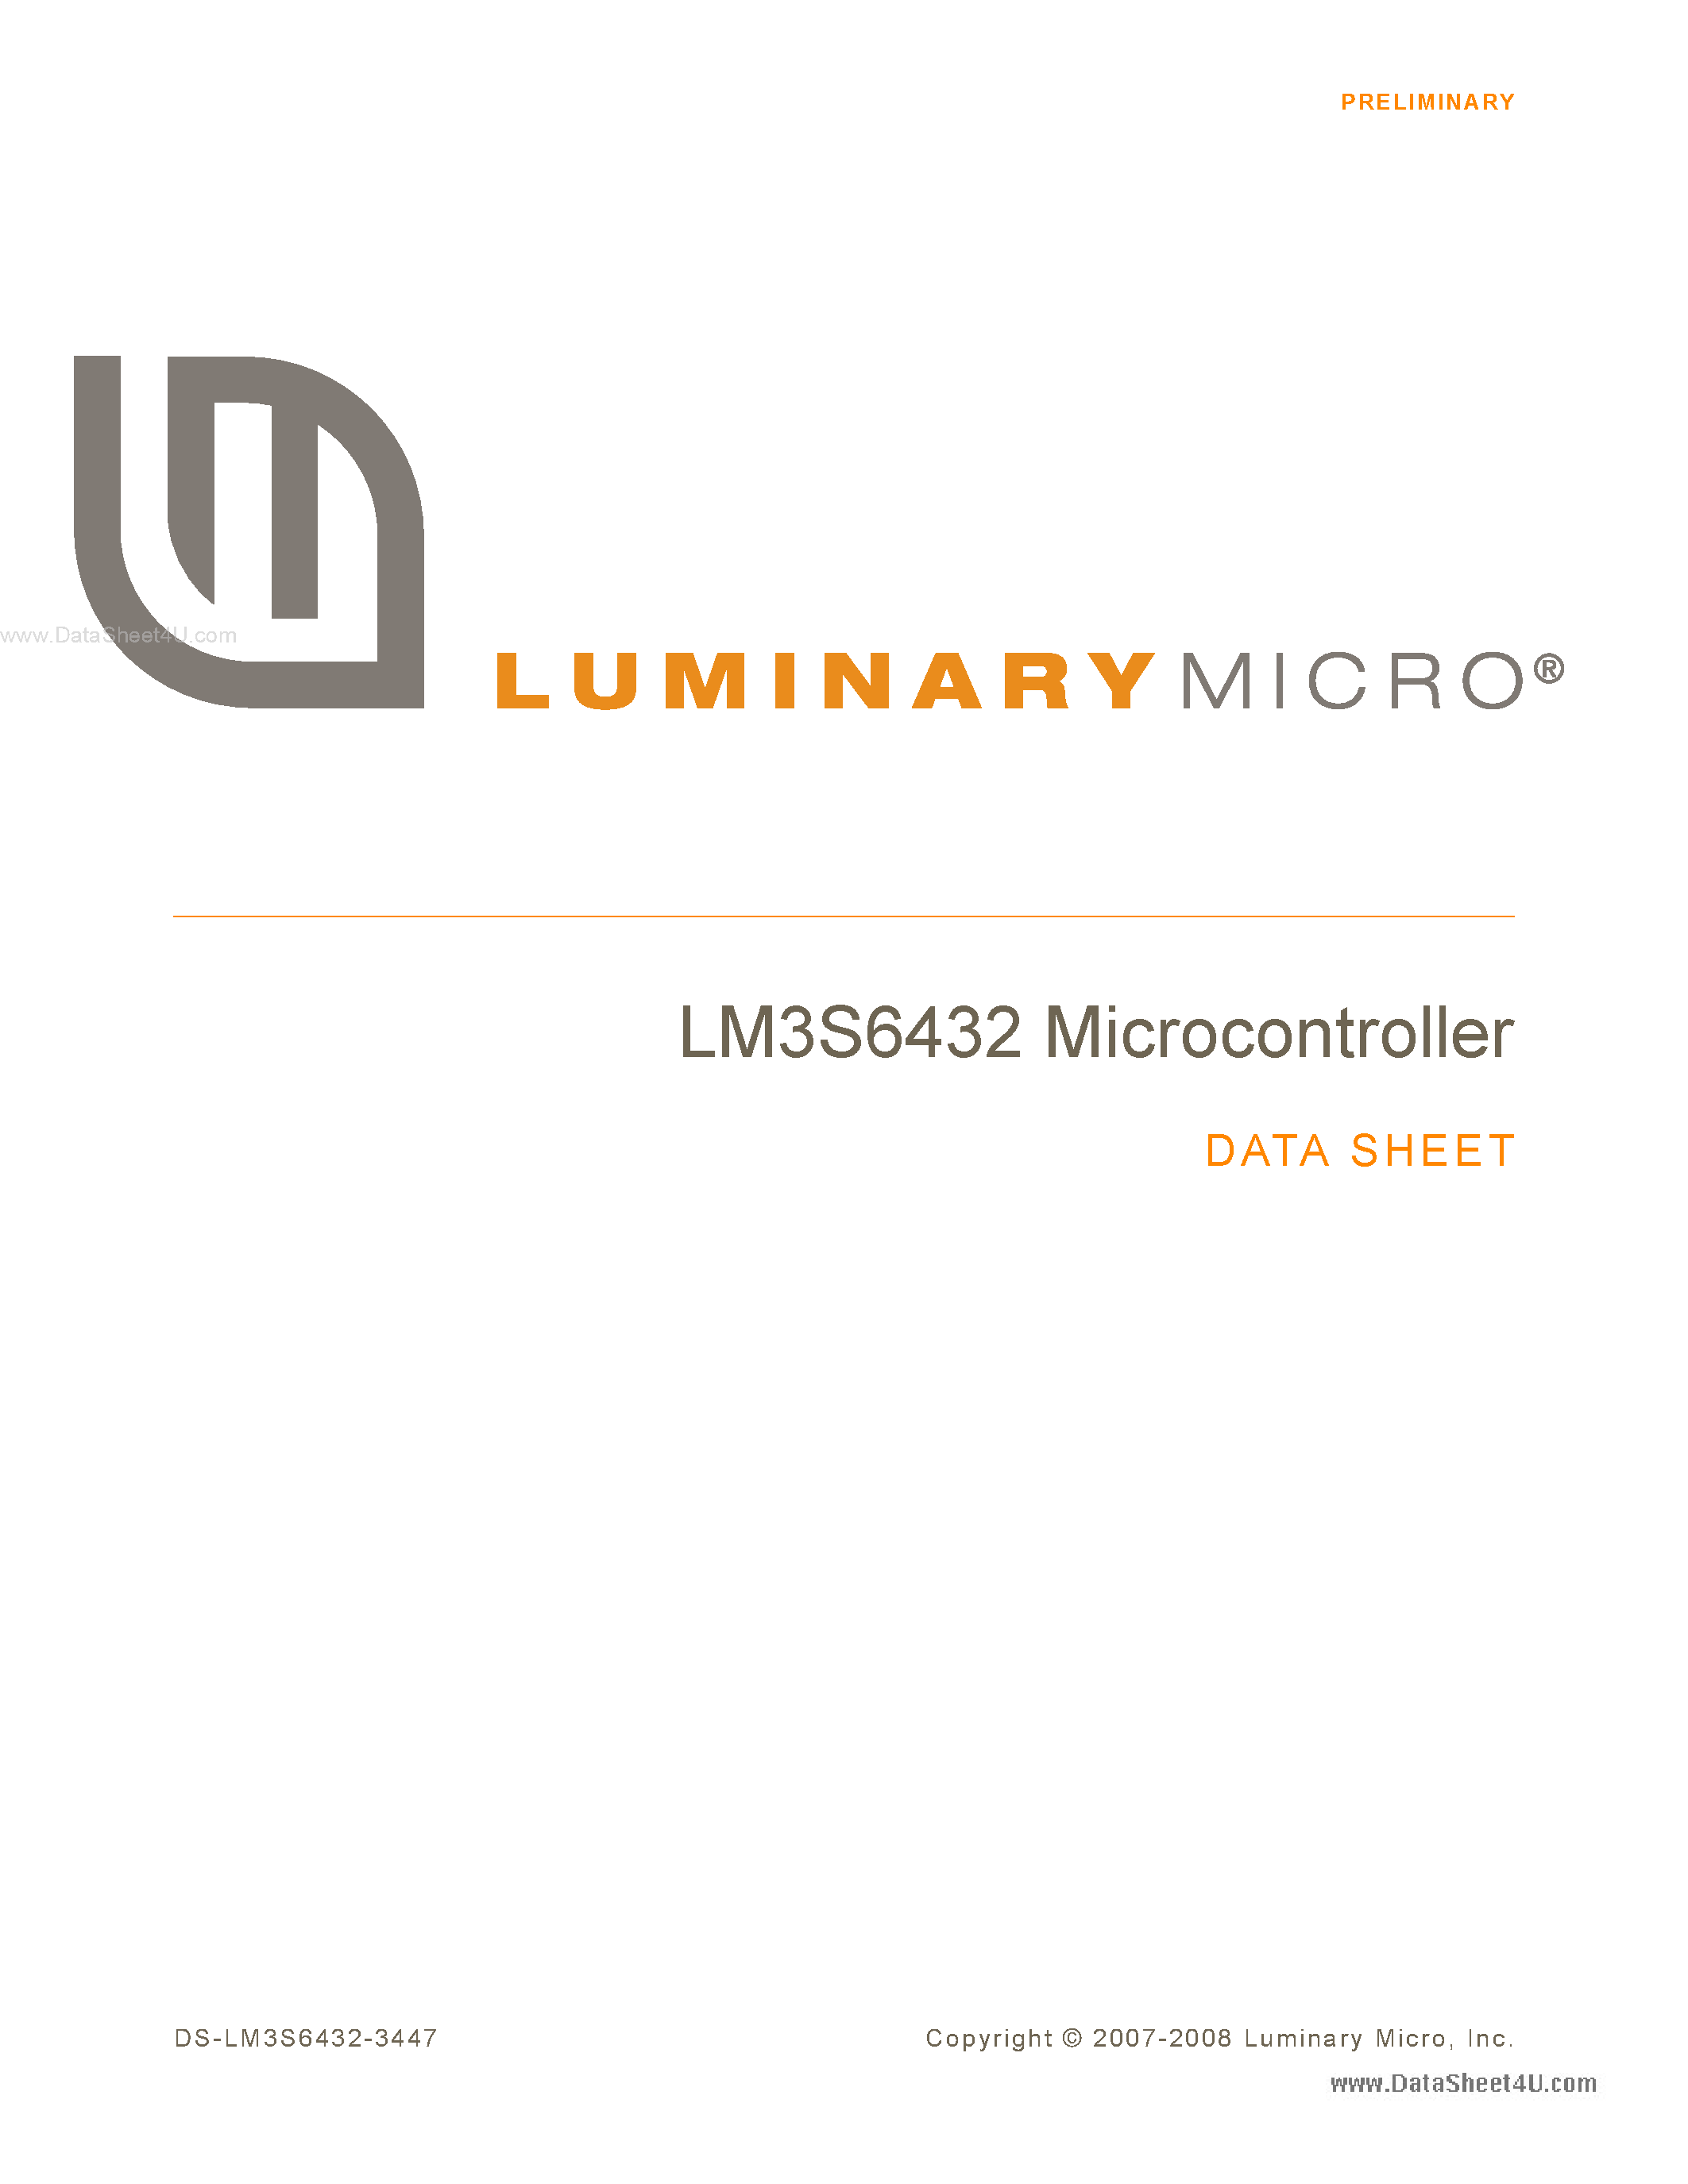 Даташит LM3S6432 - Microcontroller страница 1